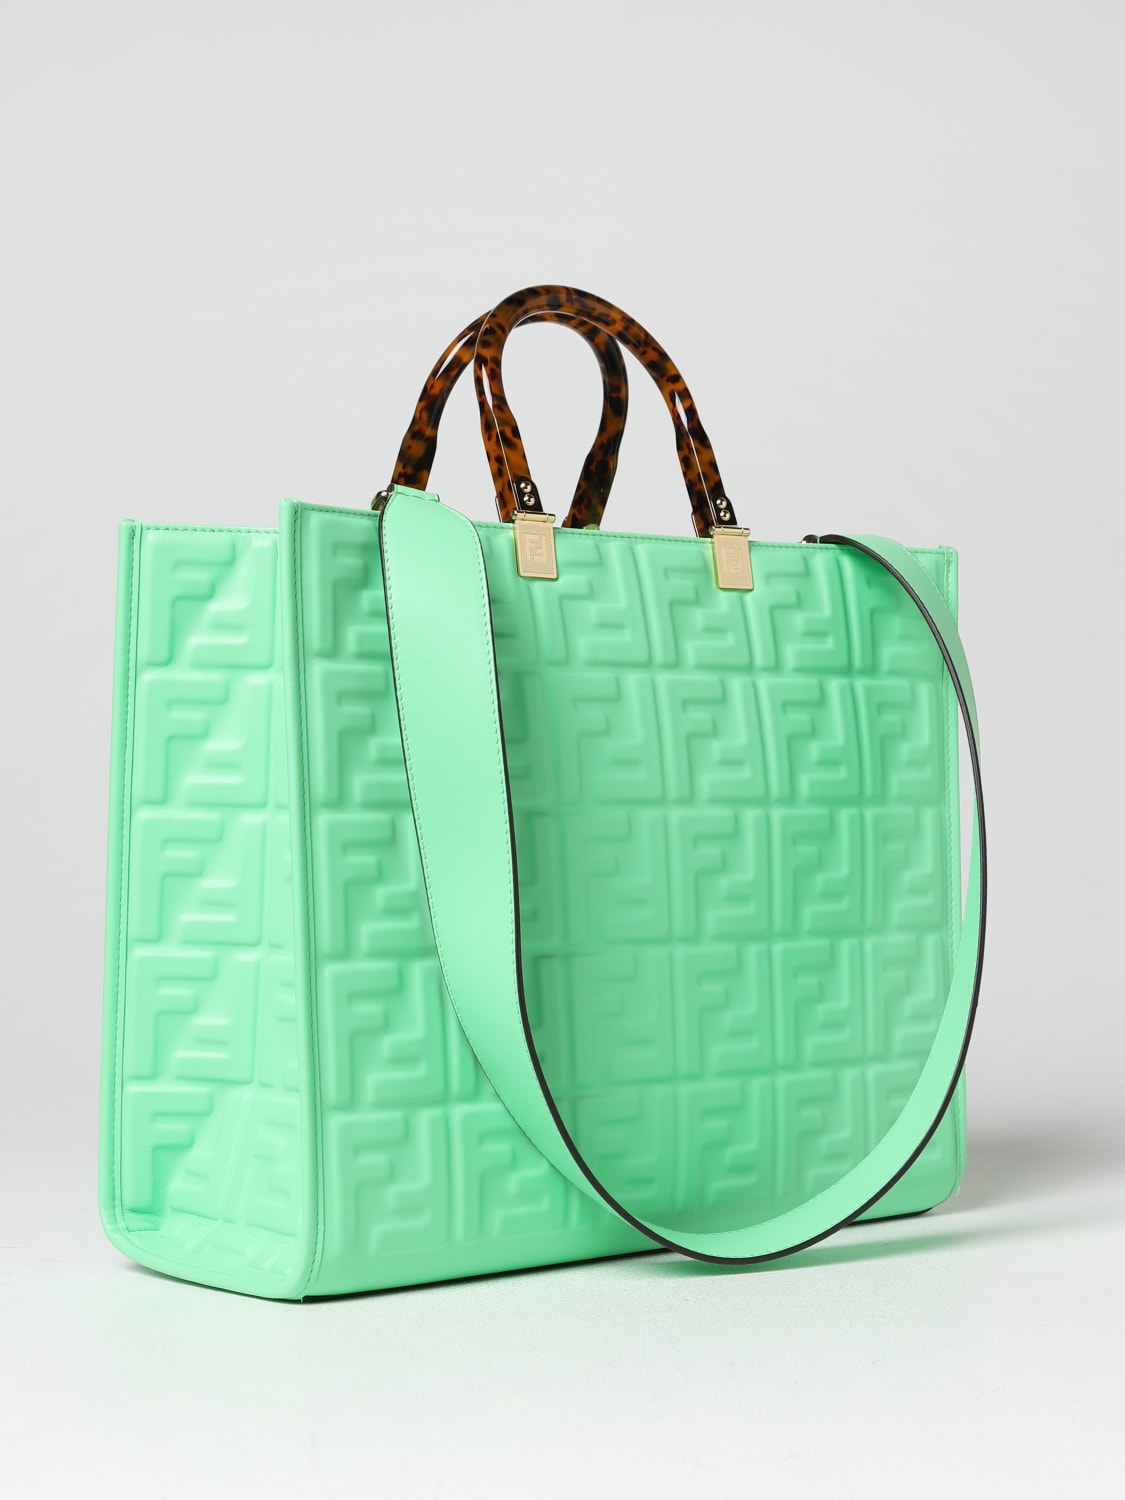 FENDI: Sunshine leather bag with embossed logo - Green | Fendi tote ...